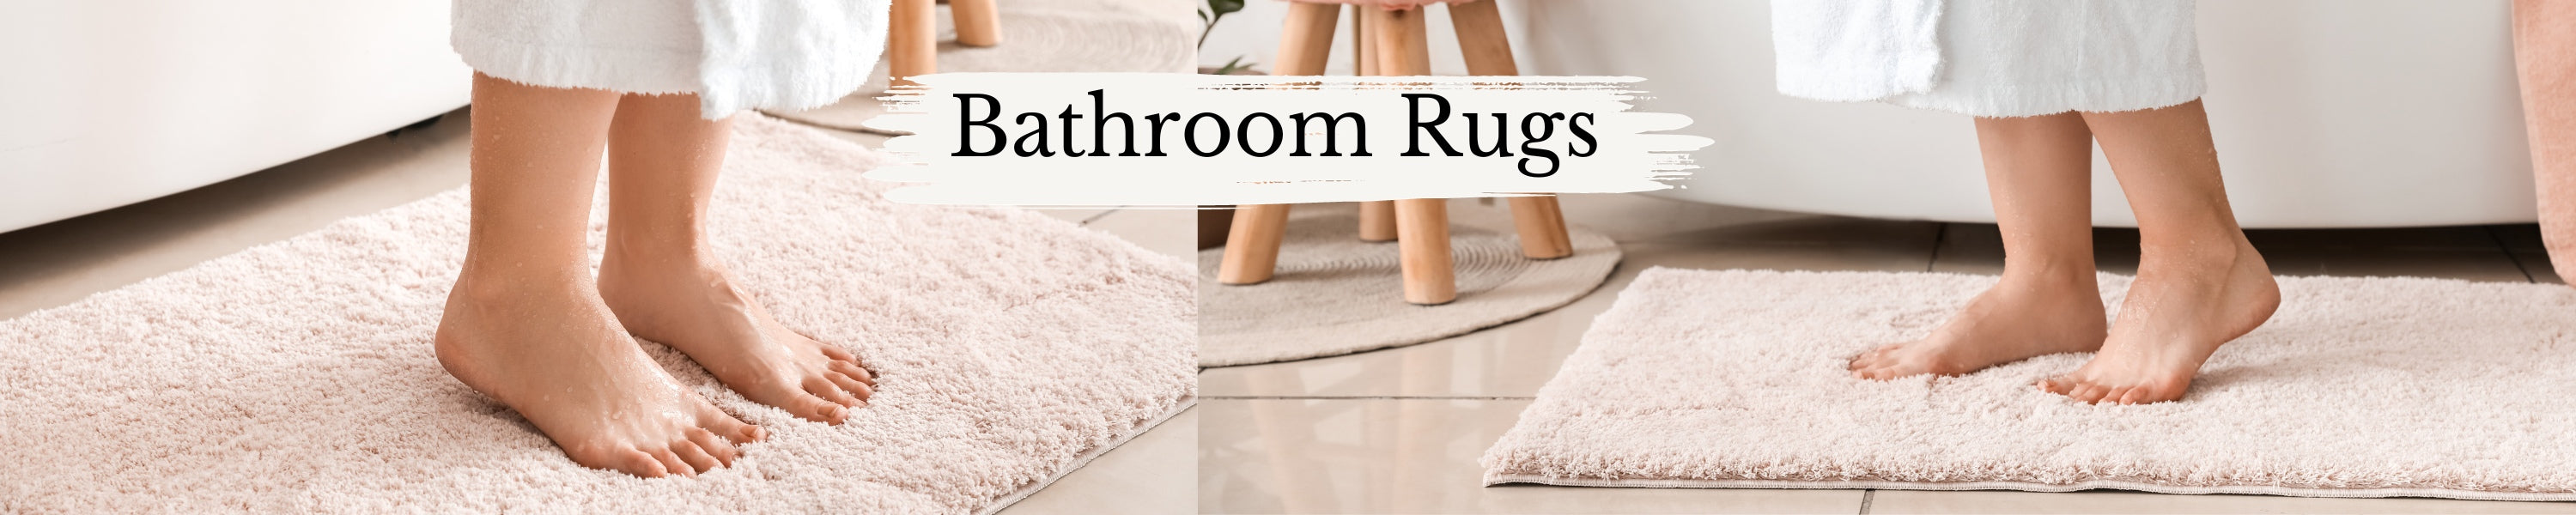 Bathroom Rugs